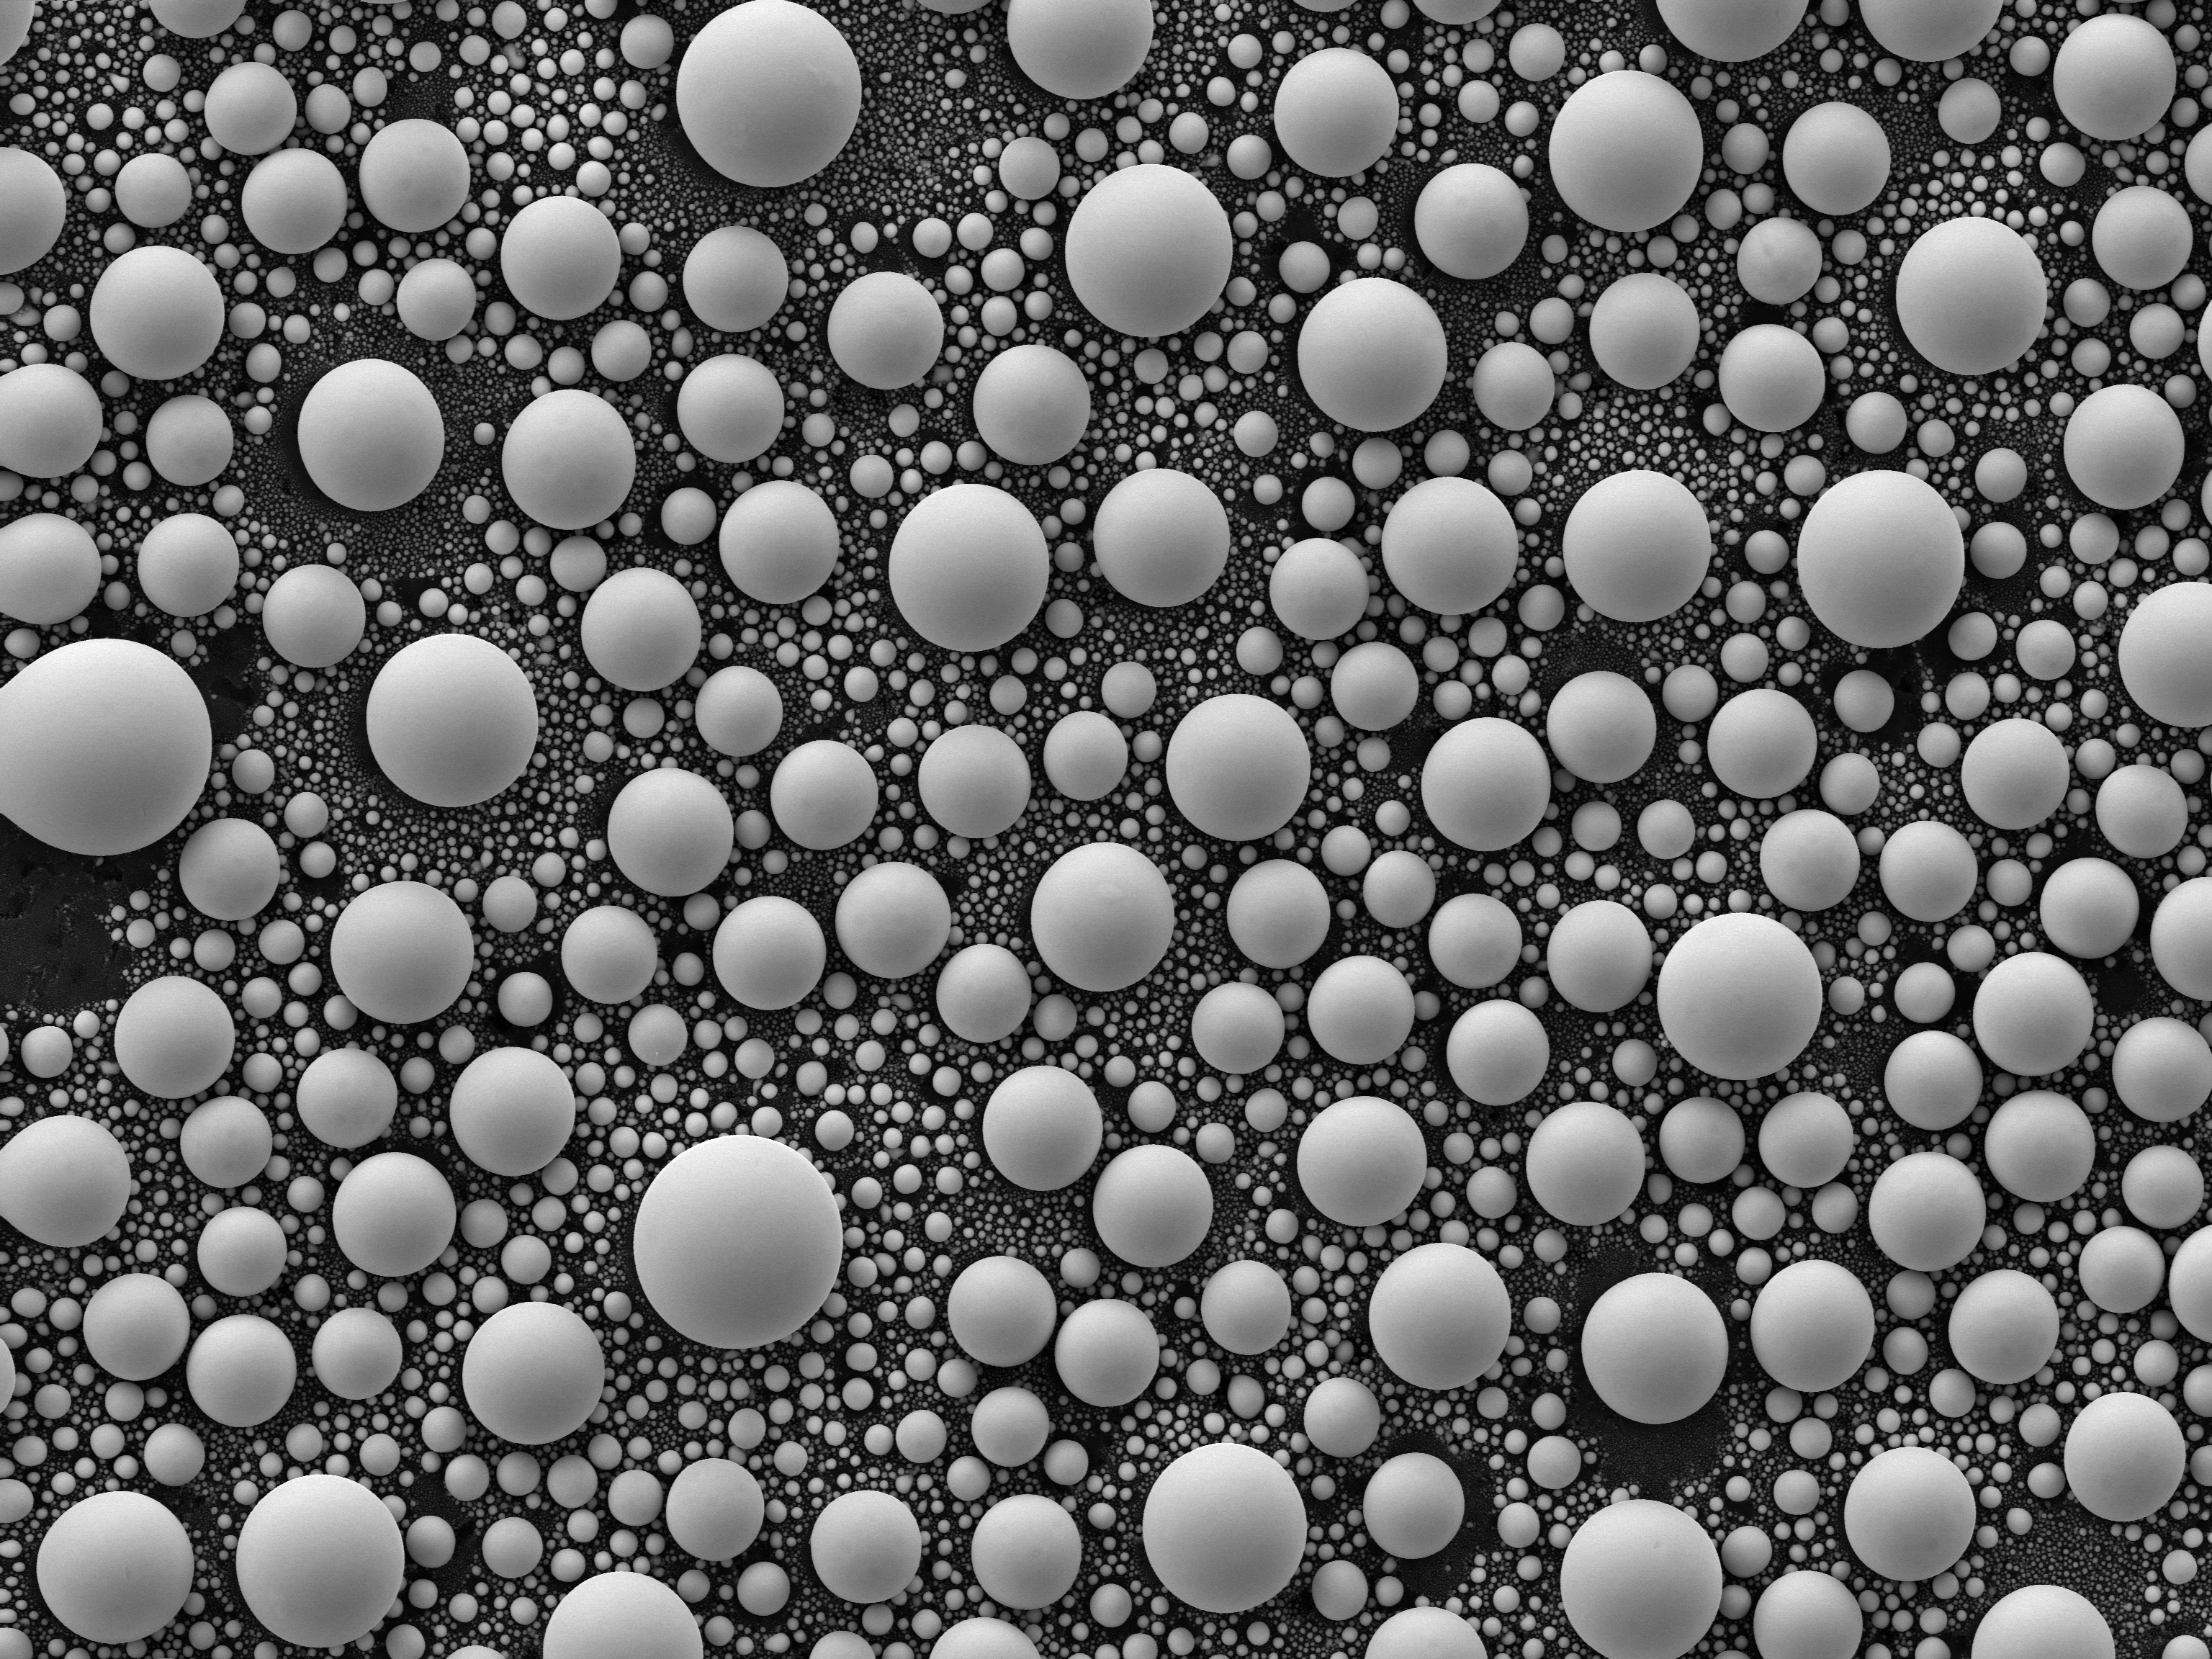 Electron micrograph of tin balls on graphite